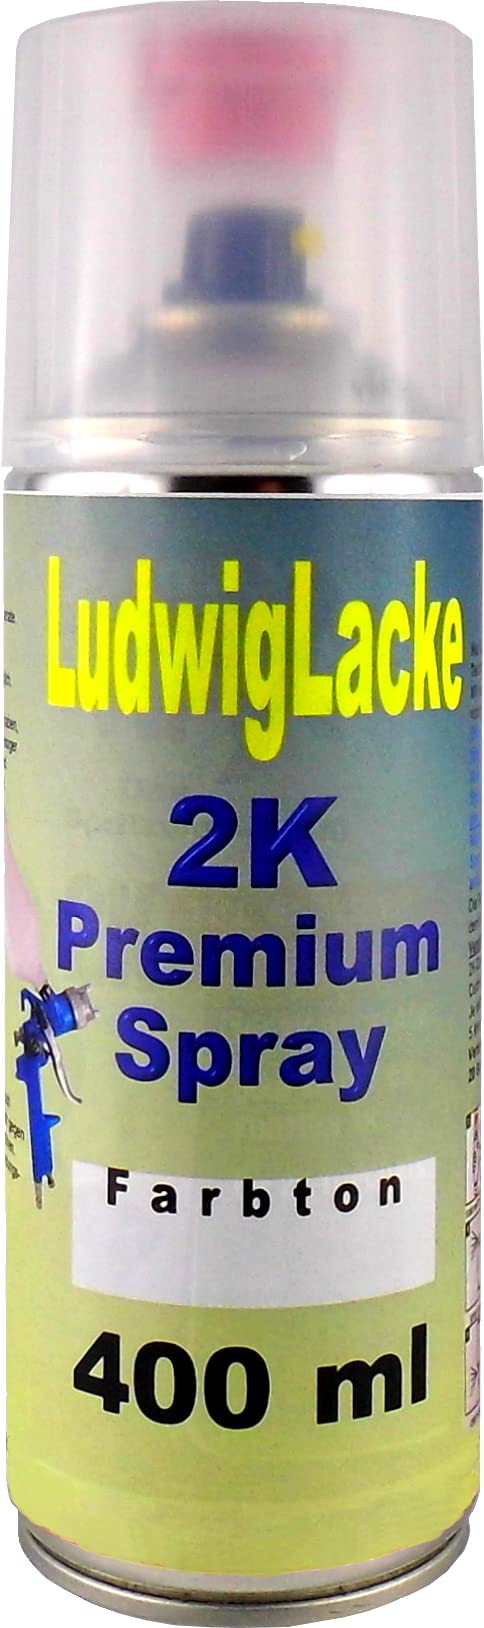 RAL 7004 SIGNALGRAU 2K Premium Spray SEIDENMATT 400ml von Ludwiglacke